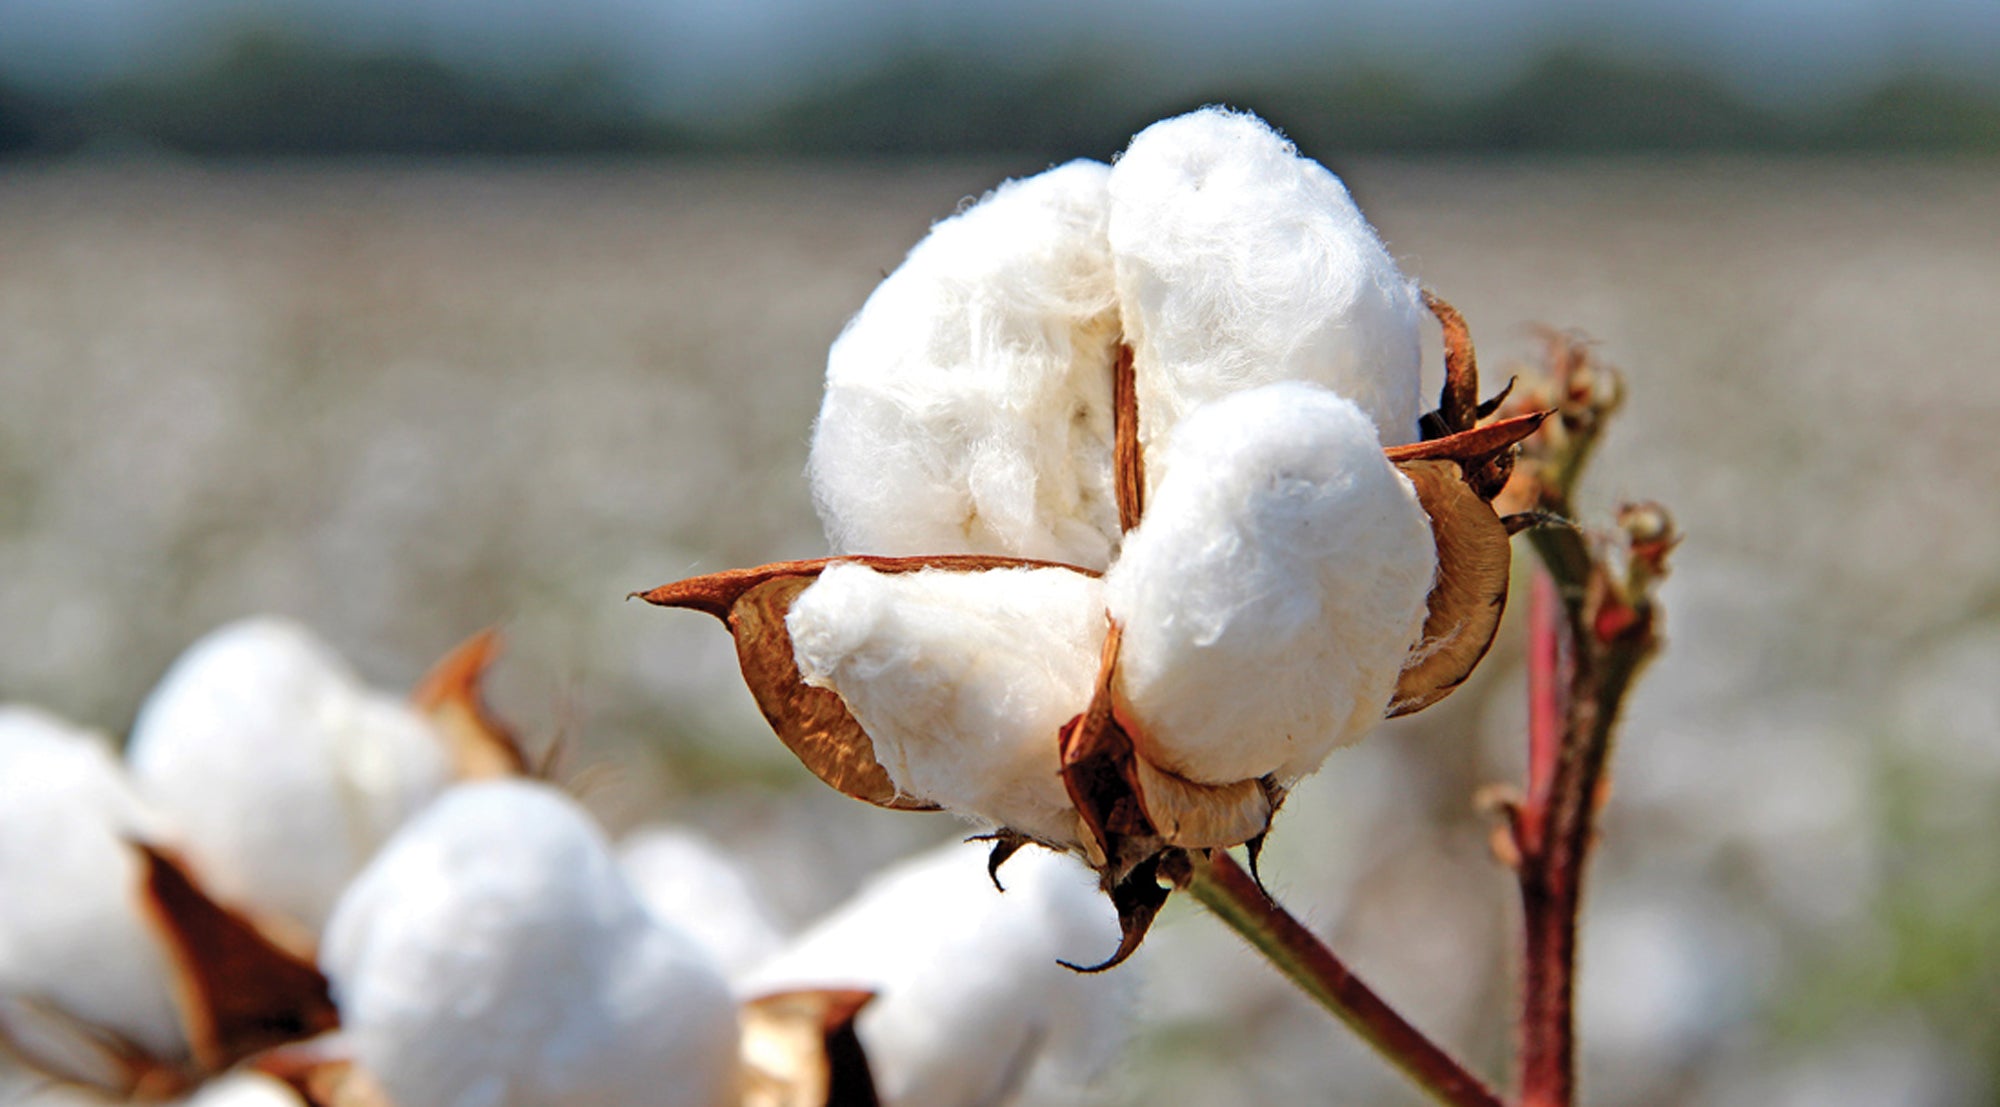 GOTS Certified organic cotton that made Pokka Kids dye free baby clothing in Brooklyn, New York